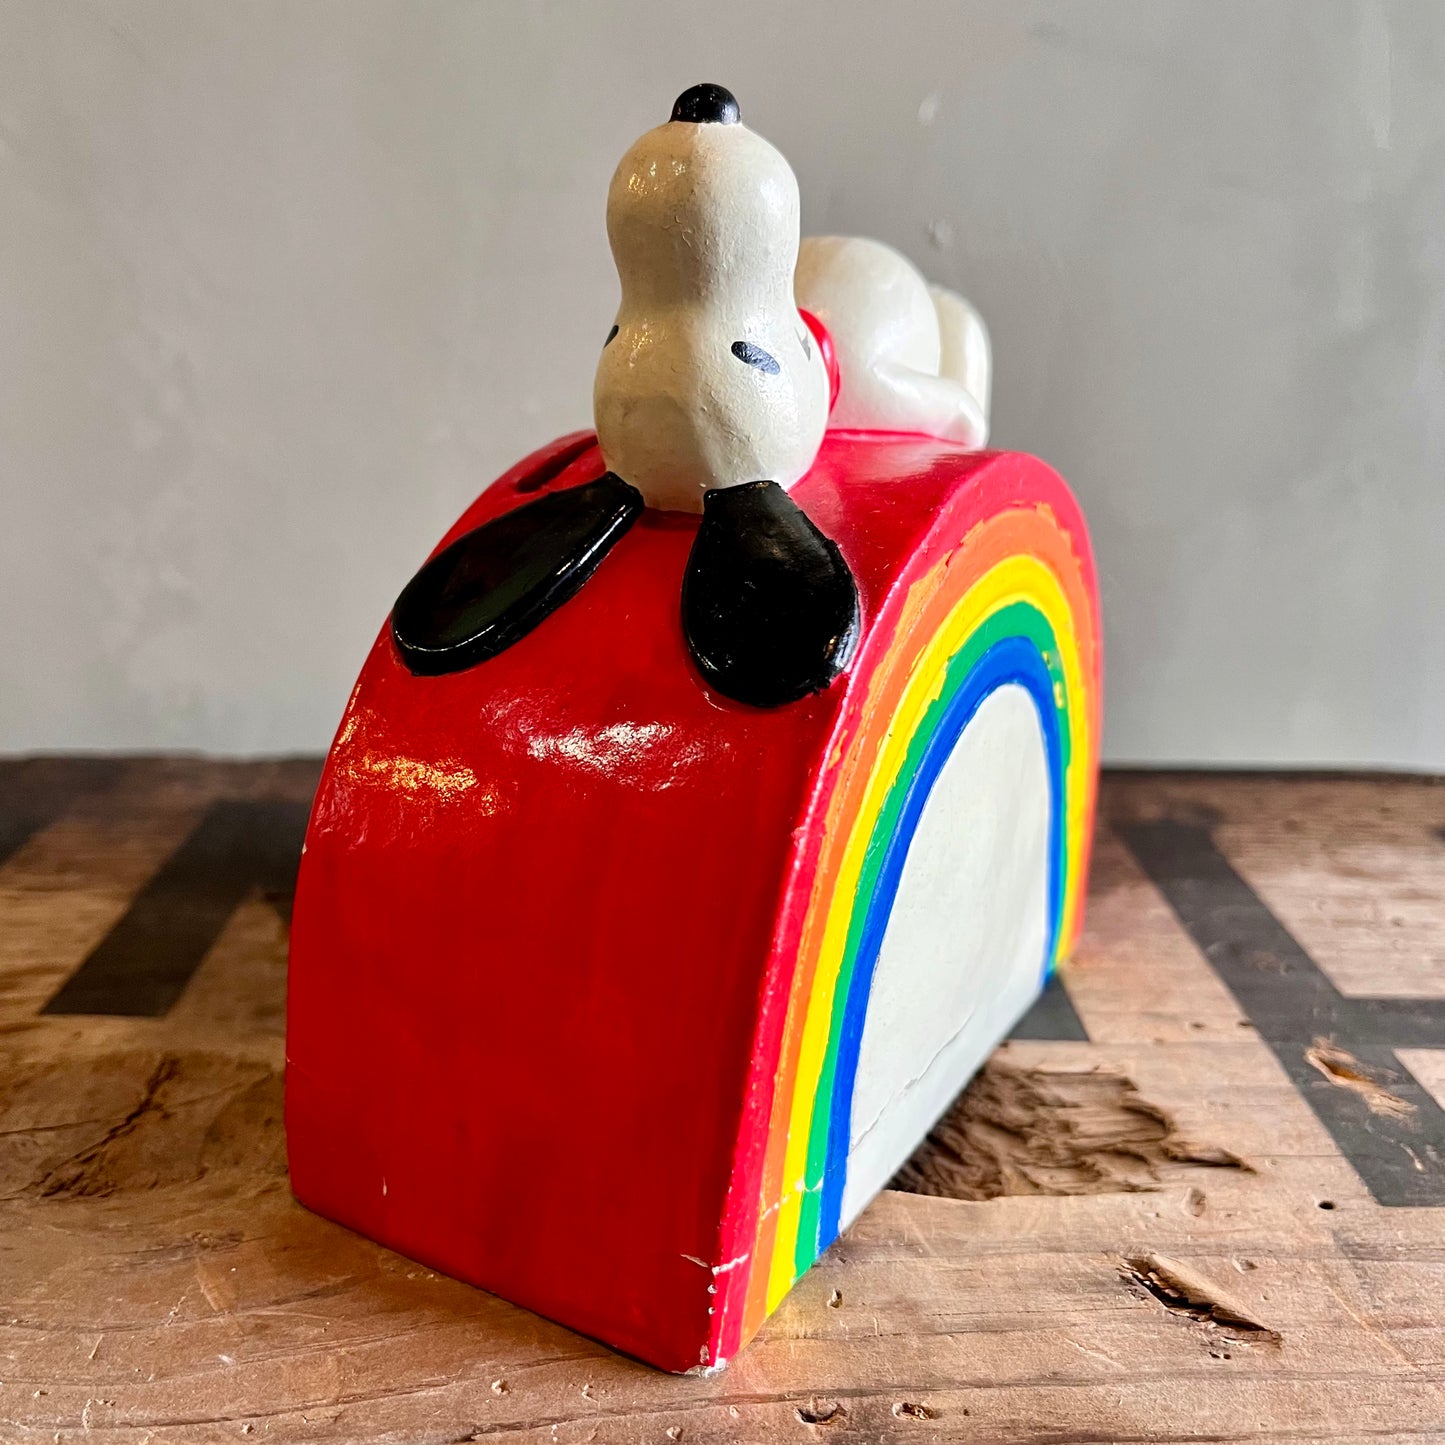 【70s vintage】Snoopy sleeping on the rainbow 
Coin bank